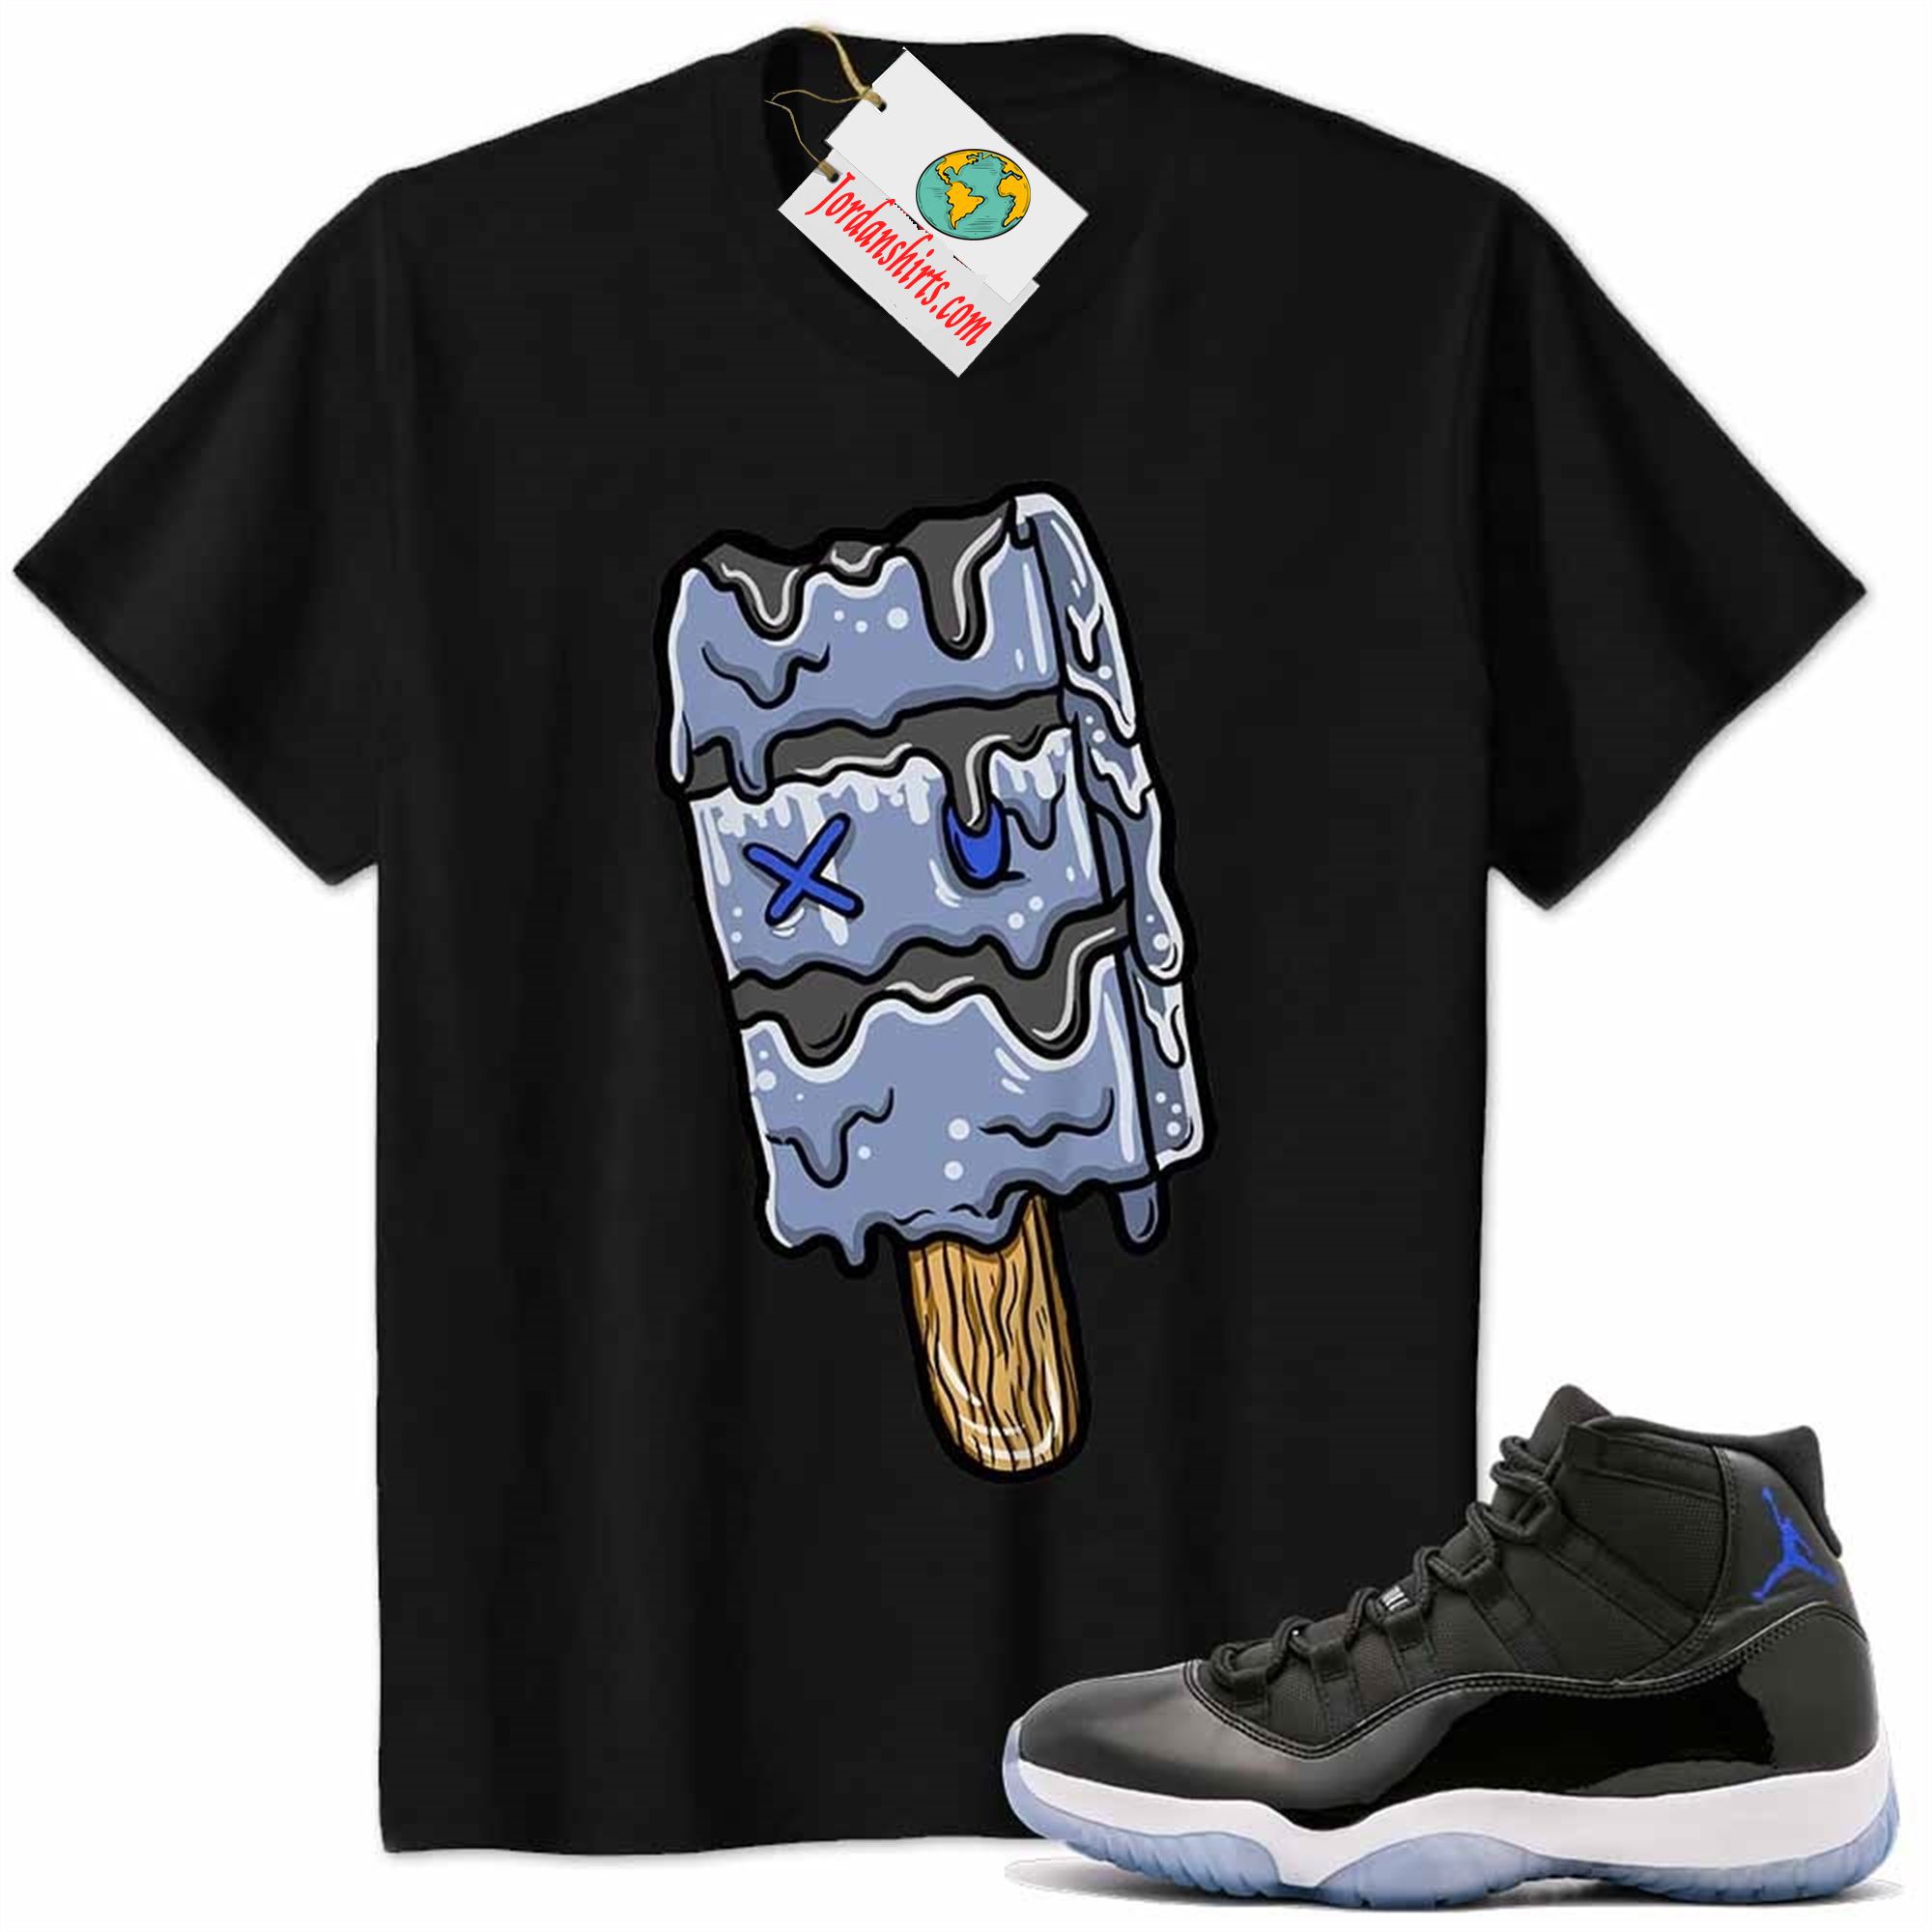 Jordan 11 Shirt, Ice Cream Dripping Black Air Jordan 11 Space Jam 11s Size Up To 5xl